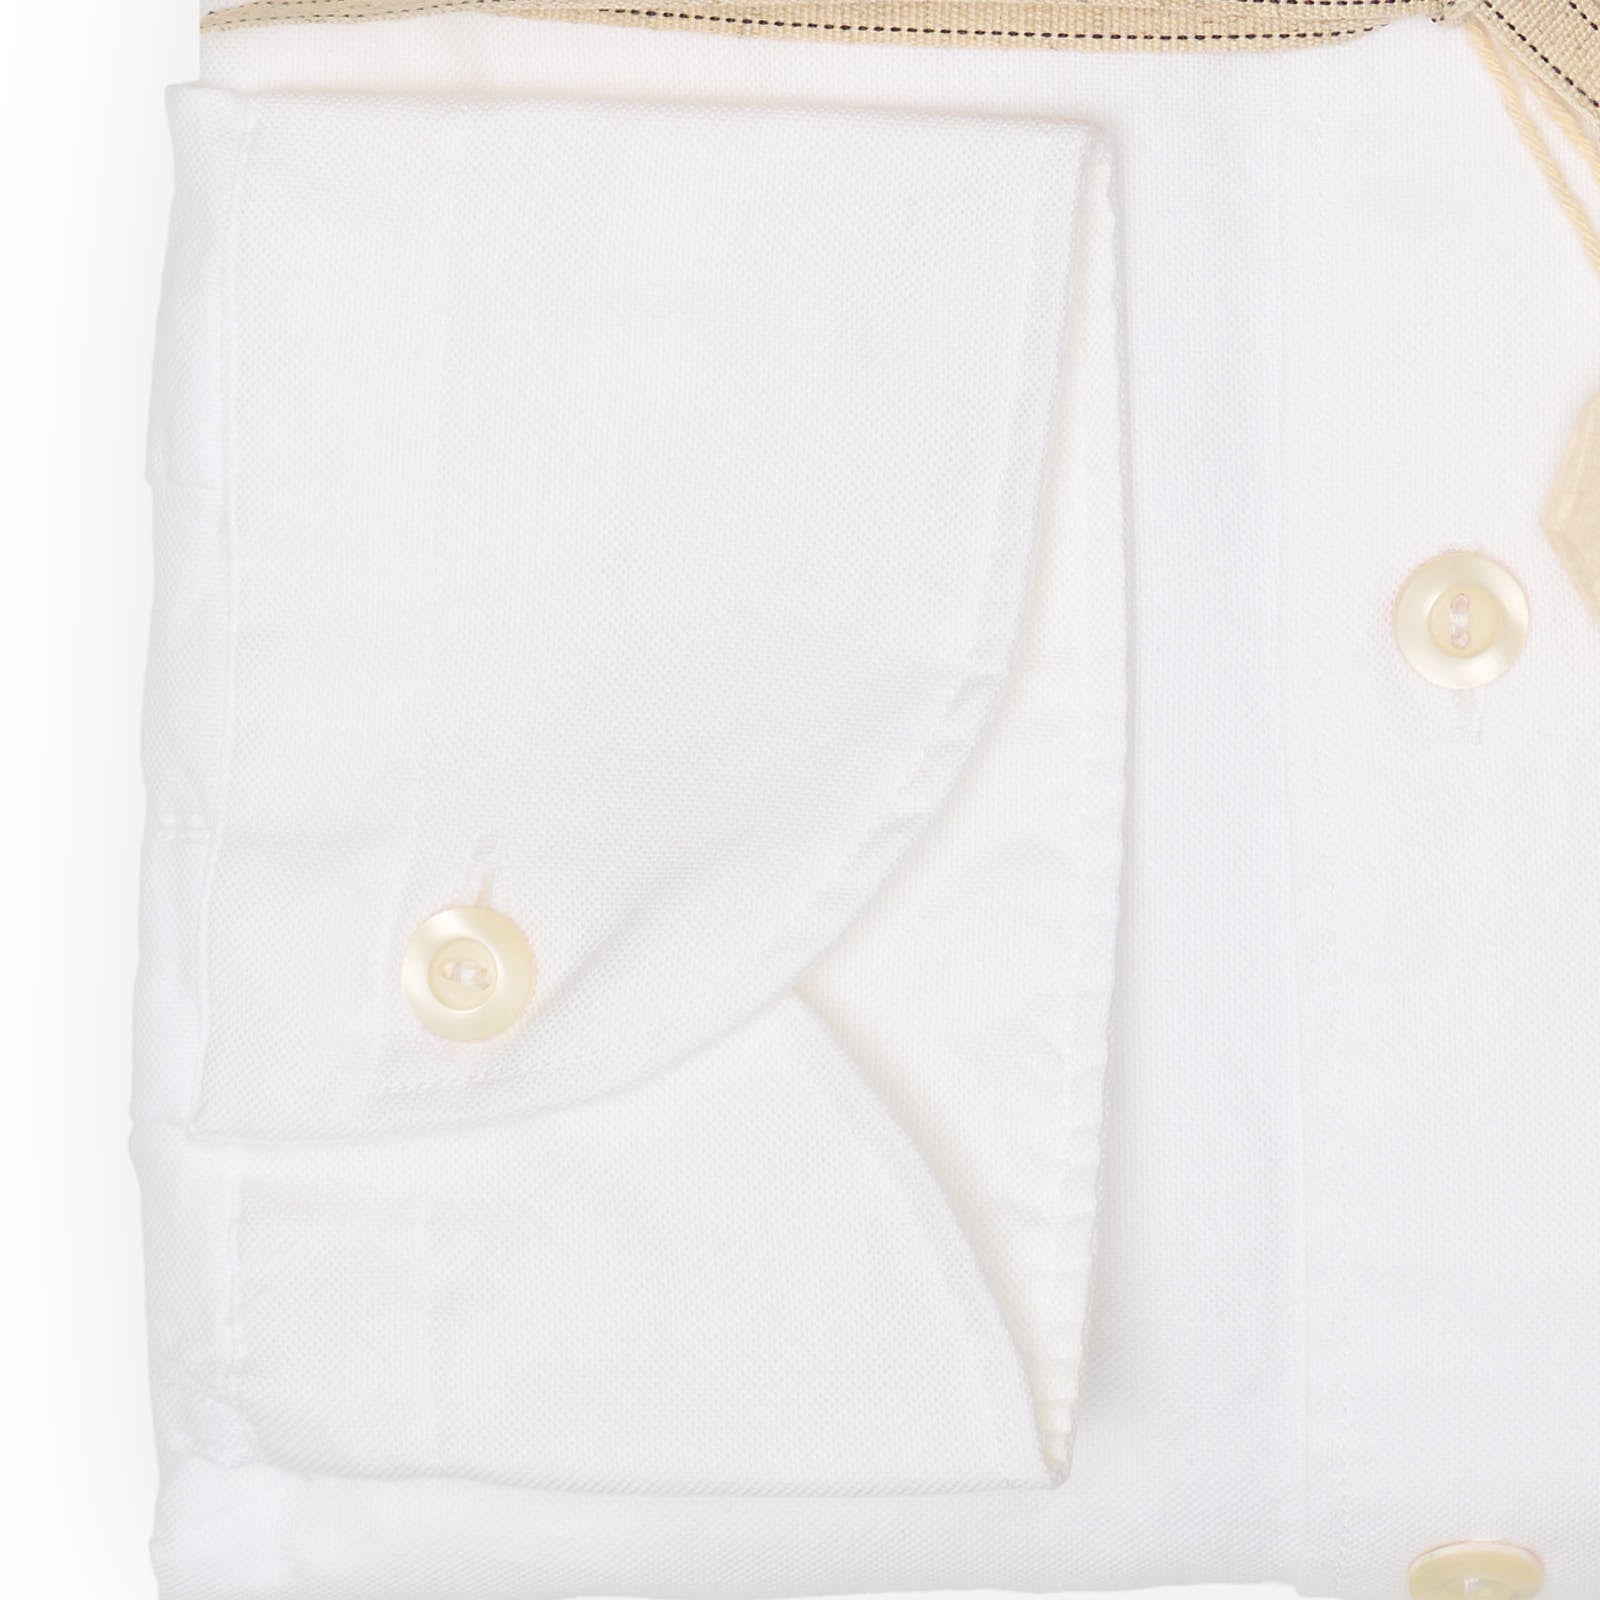 TINTORIA MATTEI 954 White Cotton Dress Shirt EU 44 NEW US 17.5